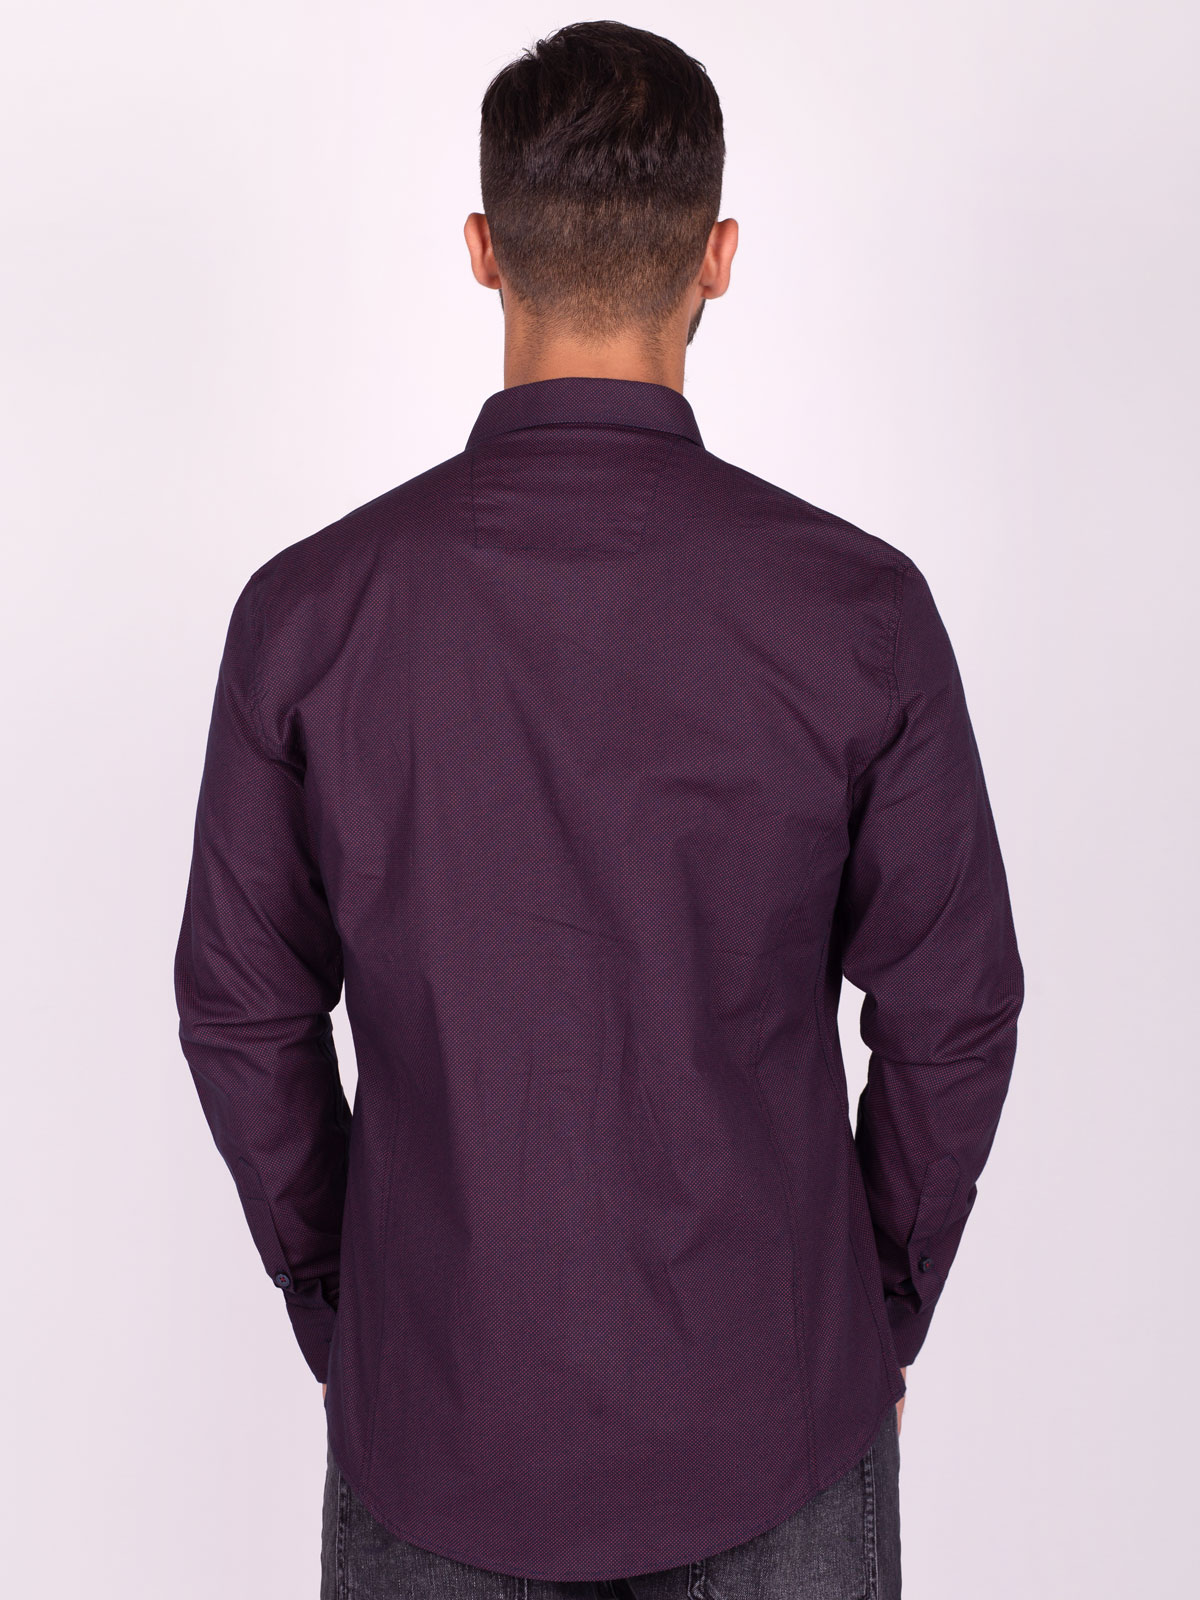 Navy blue shirt with purple polka dot pr - 21518 € 41.62 img4